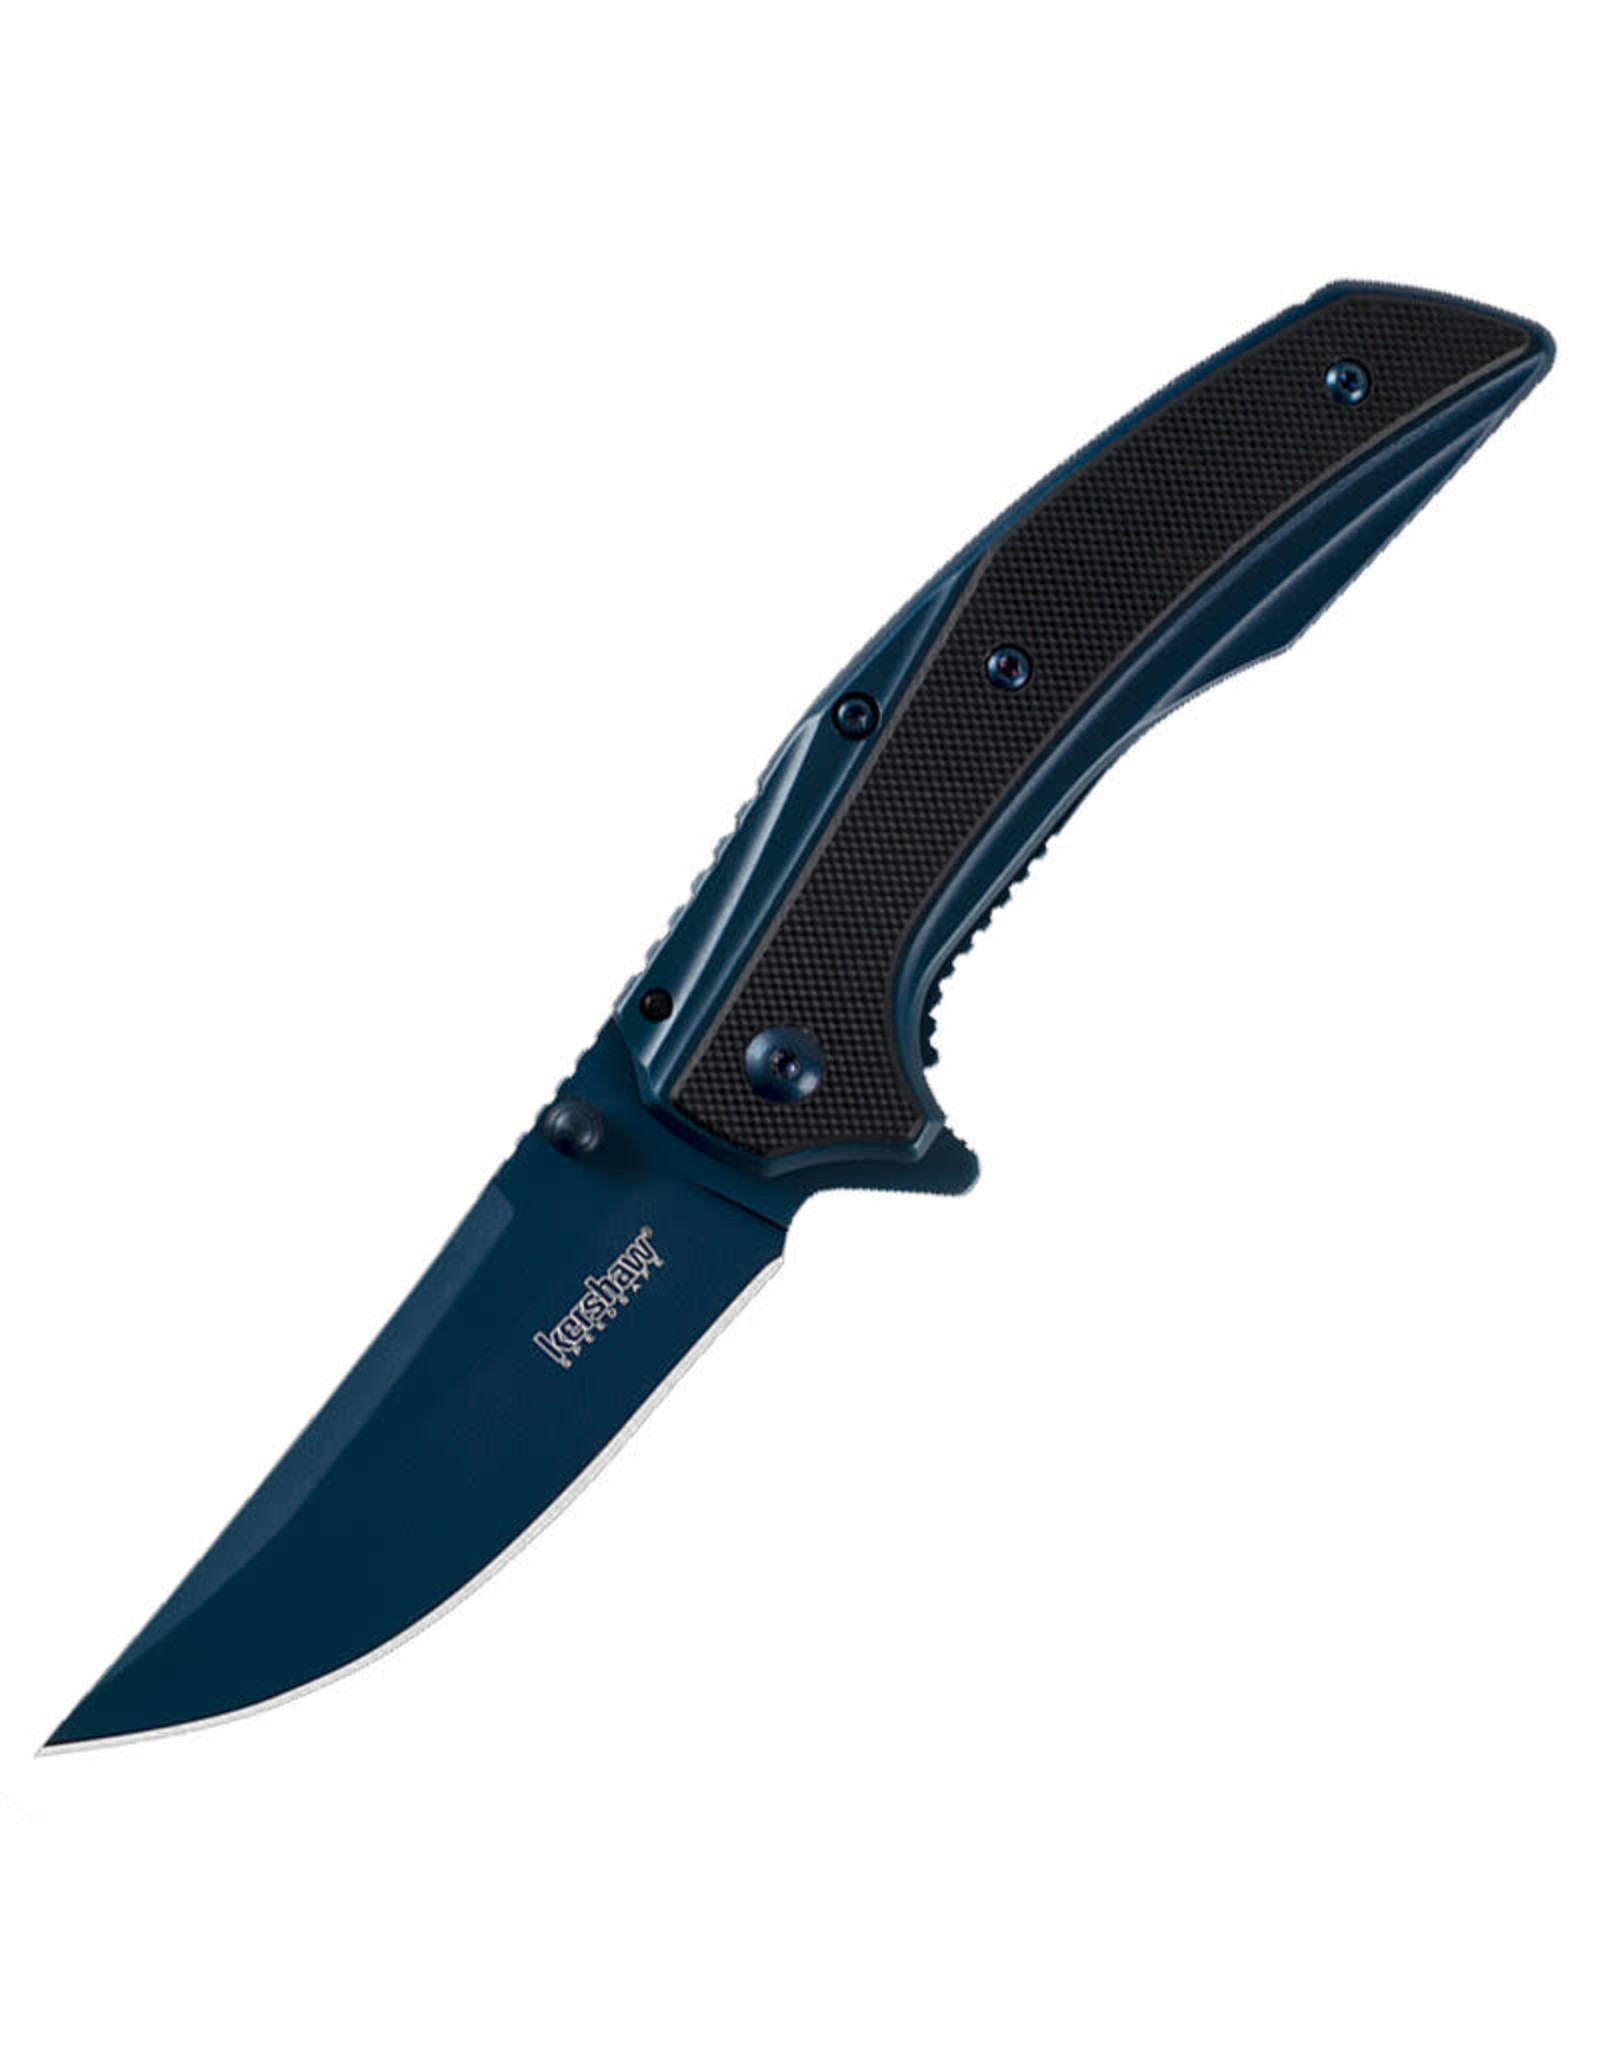 KERSHAW KER OUTRIGHT BLUE/BLACK FOLDING KNIFE